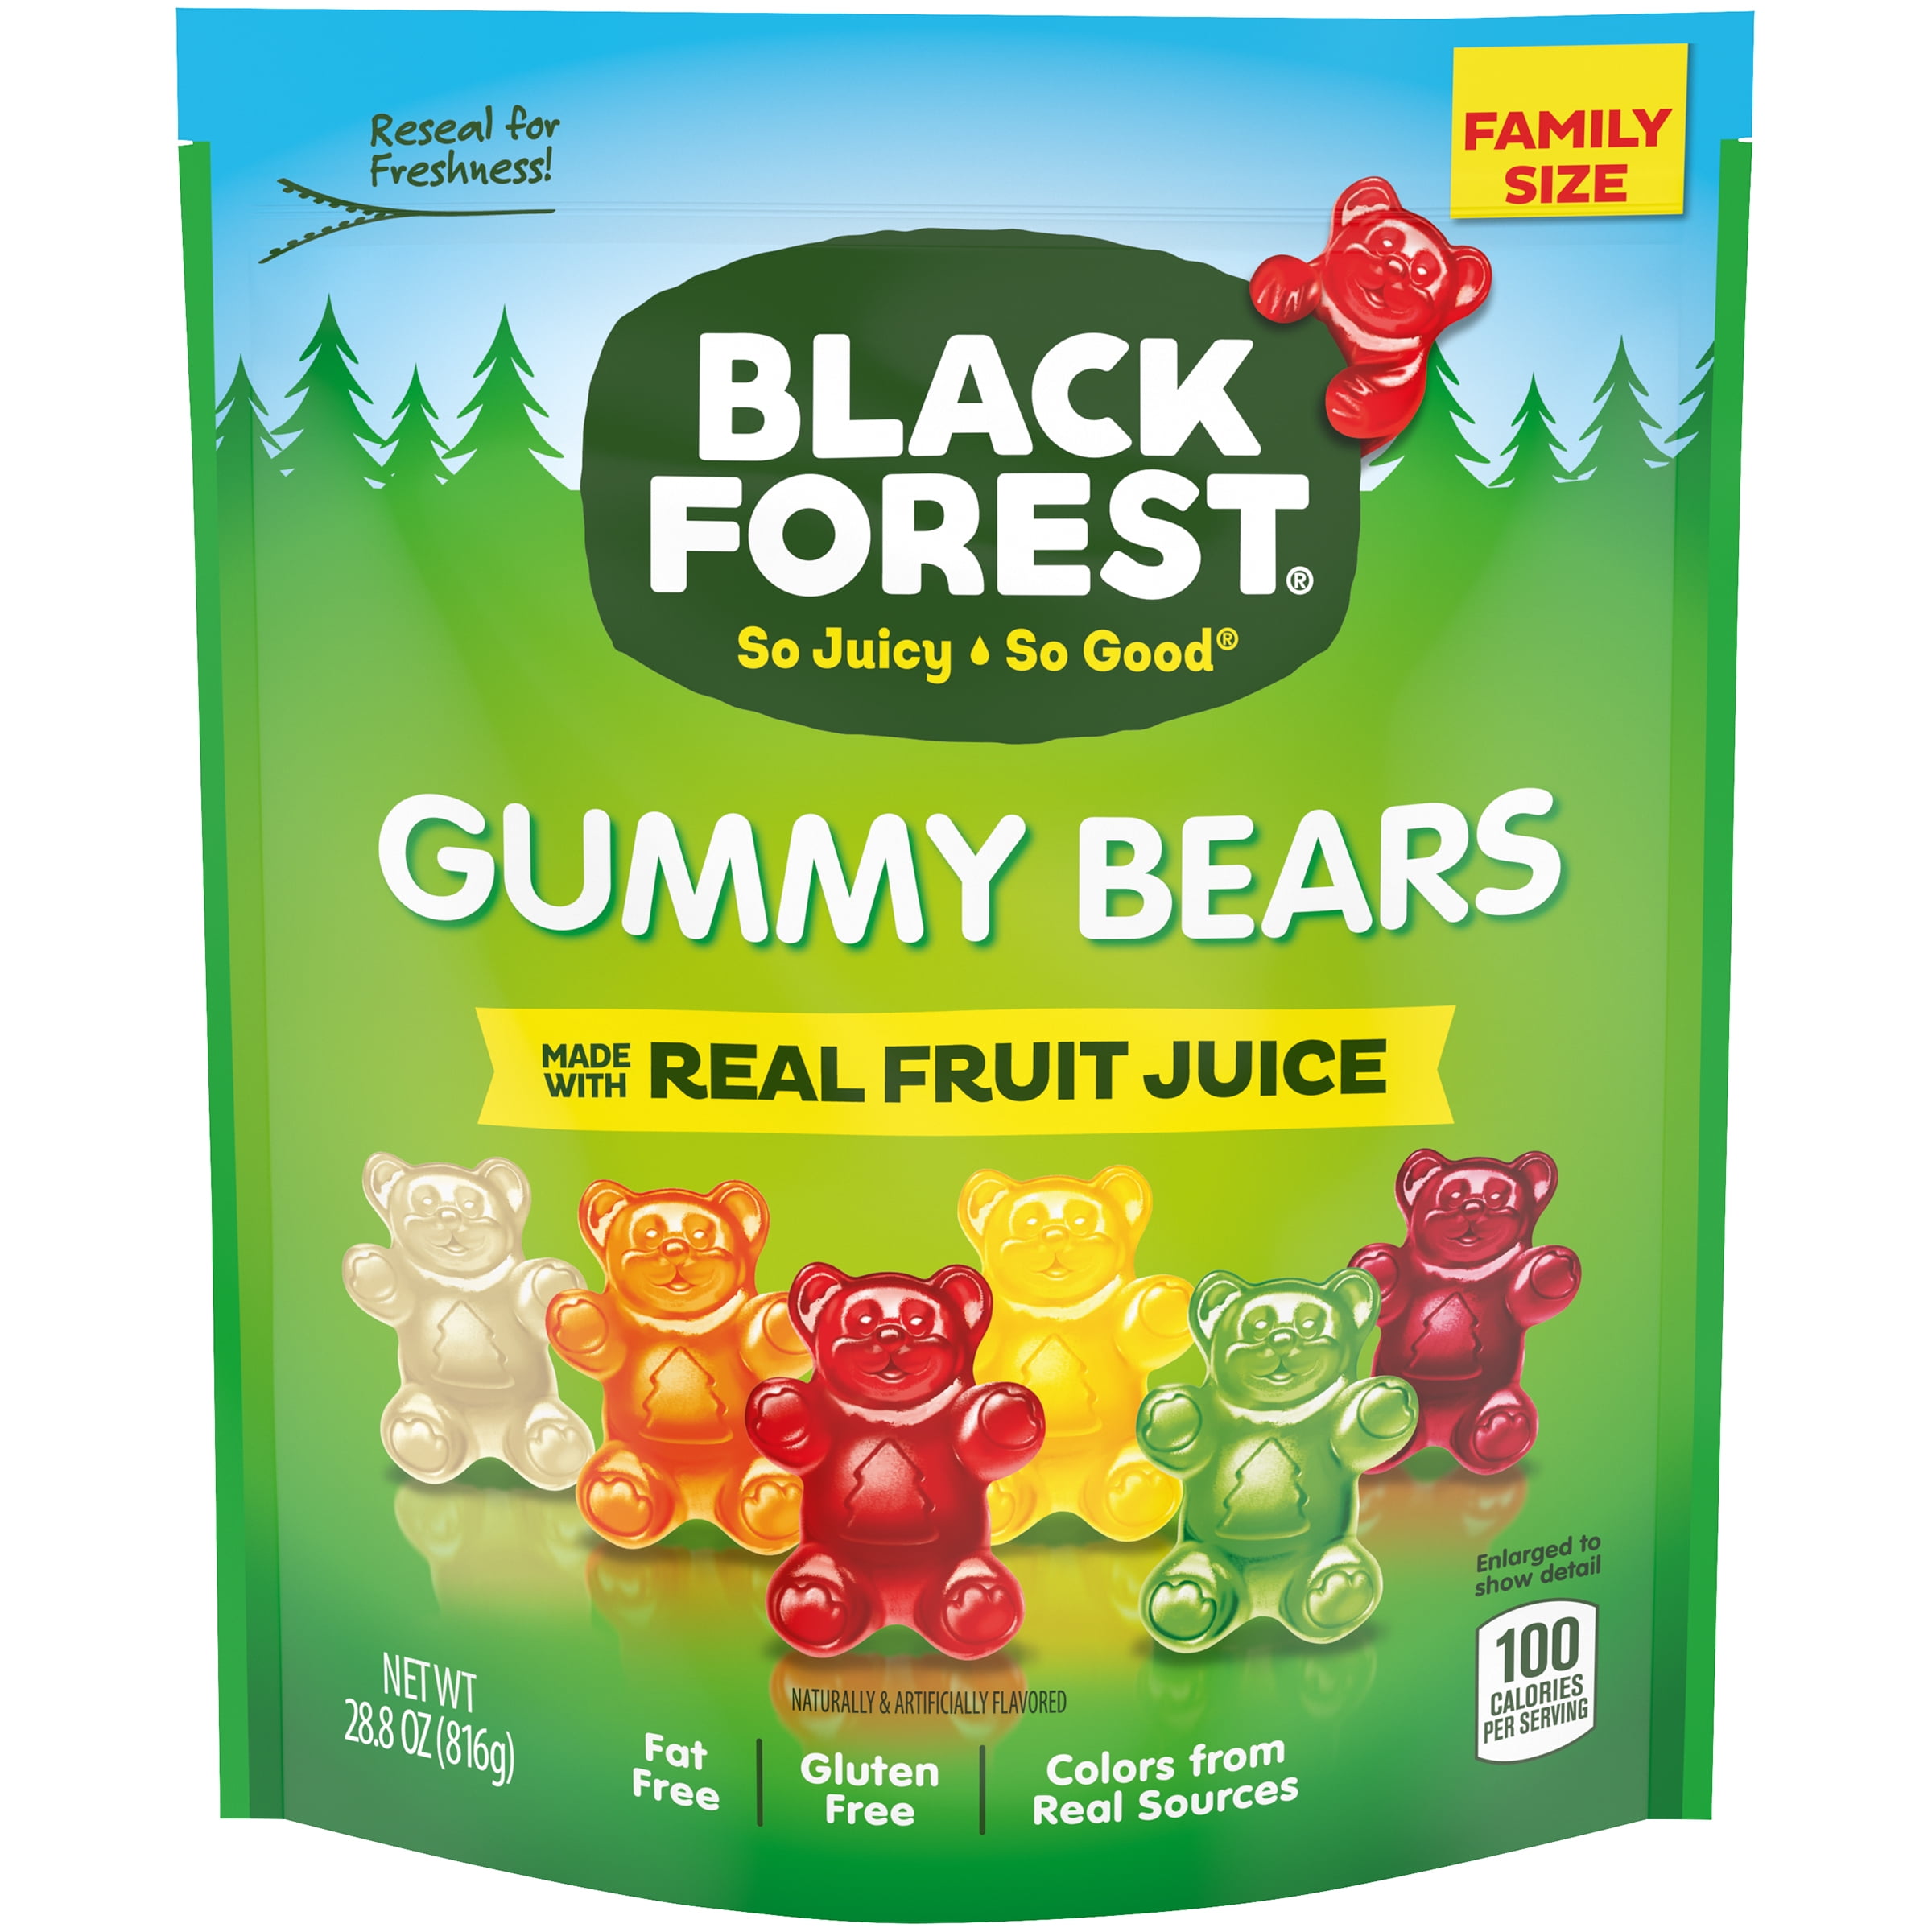 Black Forest Gummy Bears Candy Bag, 28.8 oz Recloseable Bag